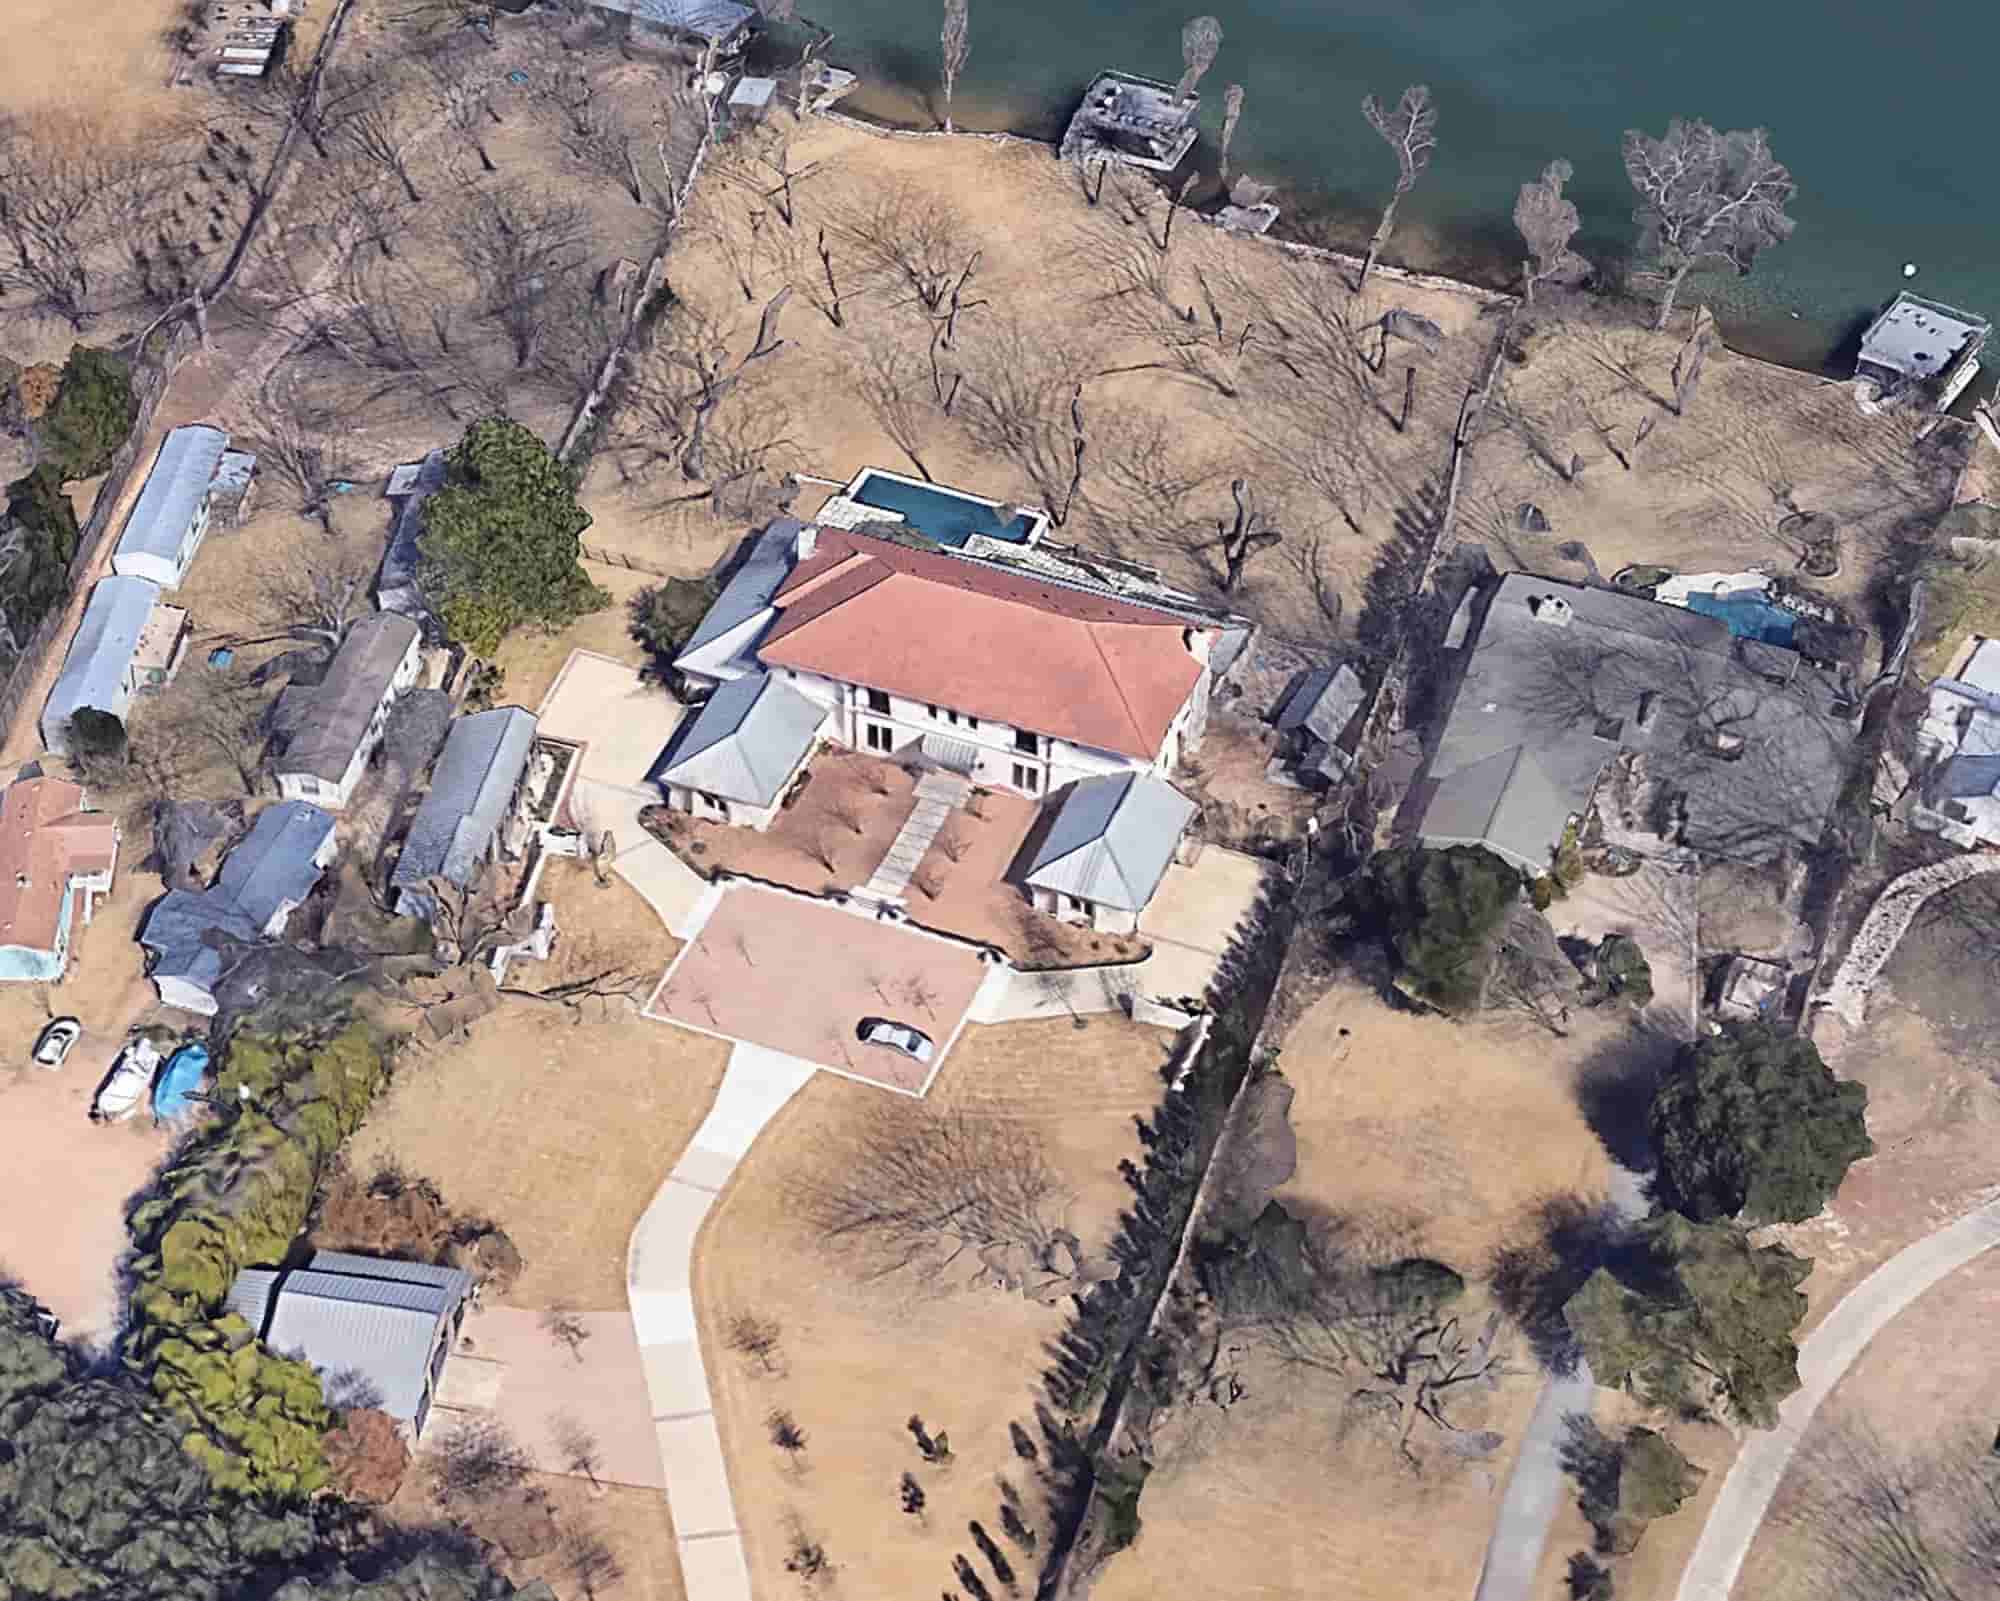 Joe Rogan’s home (Source: Google Maps)